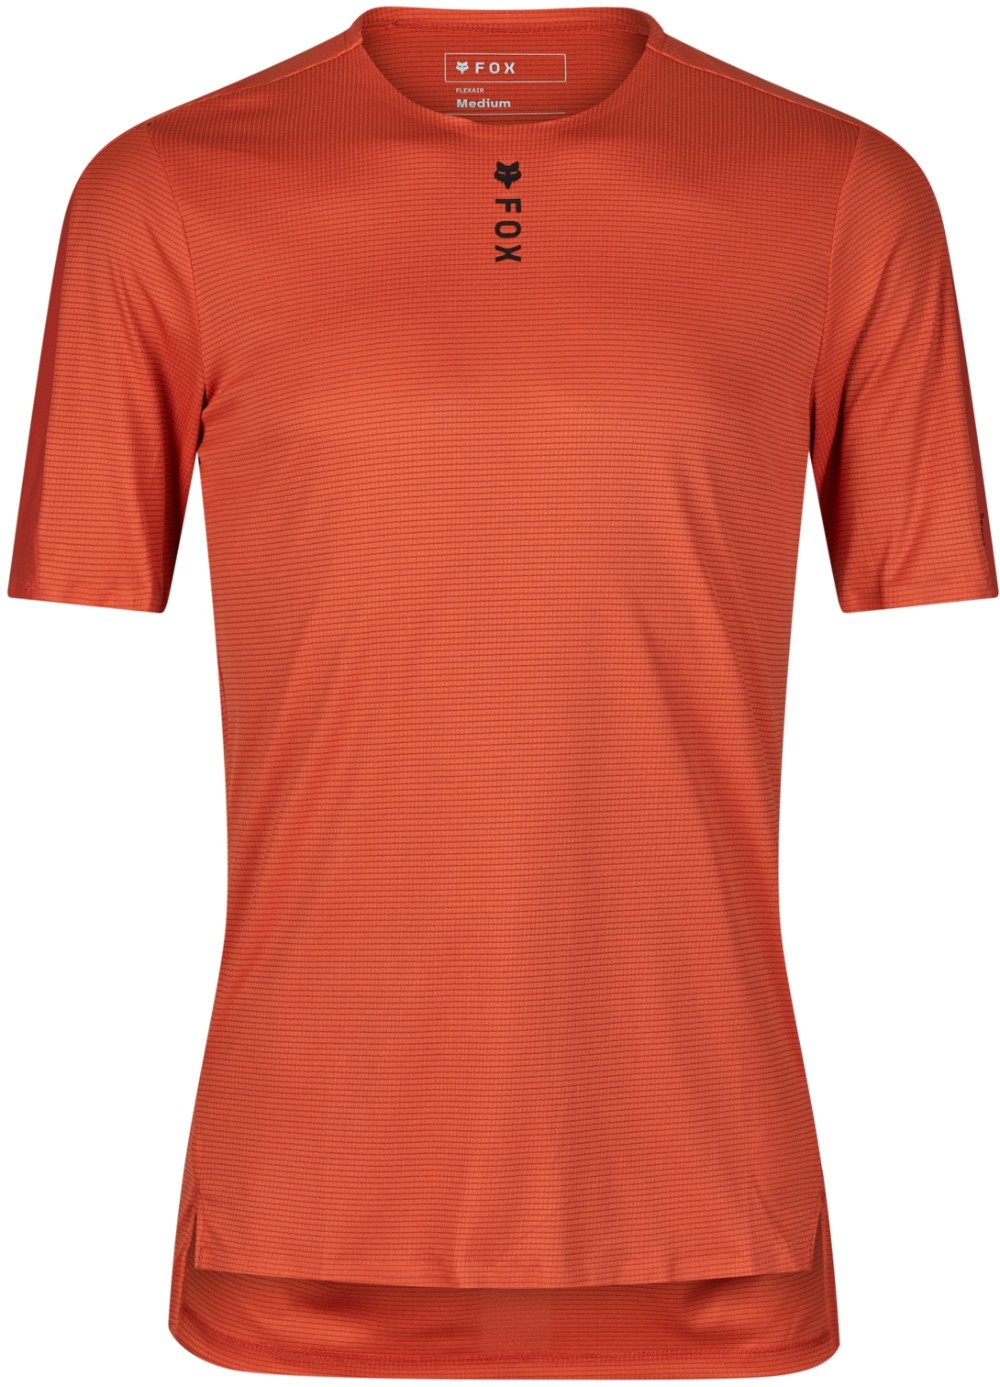 Flexair Pro Short Sleeve MTB Jersey image 0